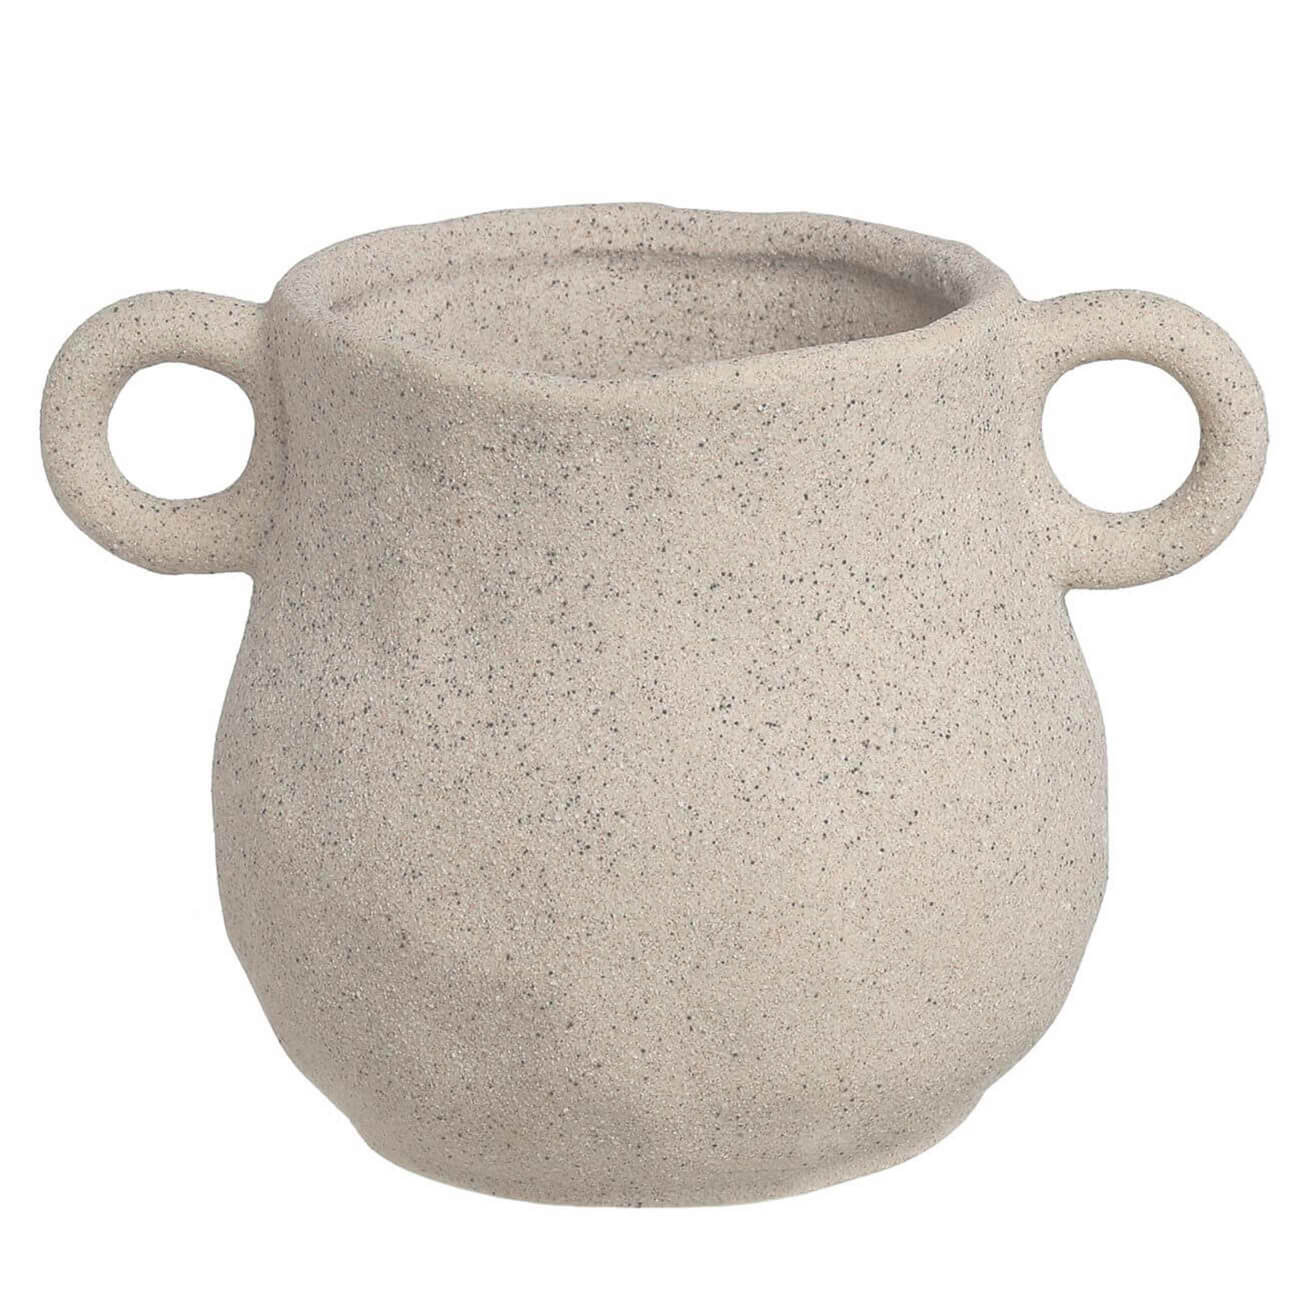 Decorative vase, 13 cm, with handles, ceramic, grey, Antic изображение № 1